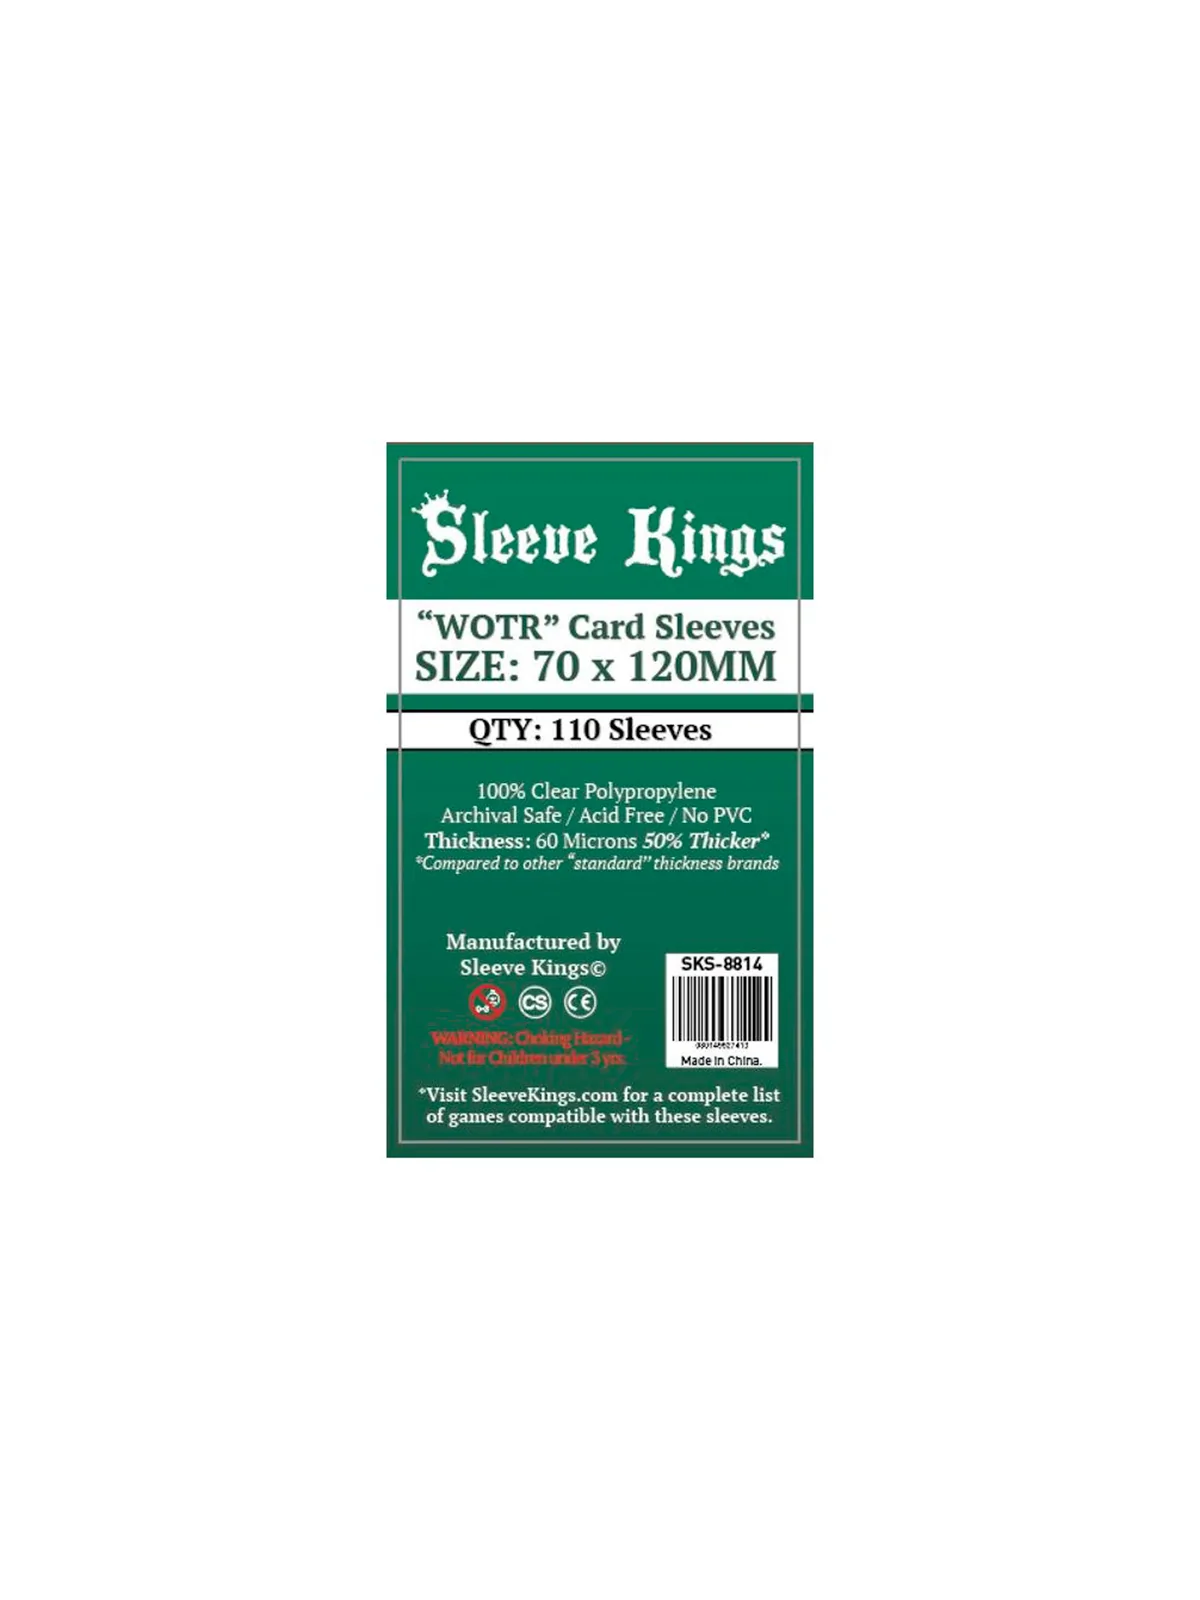 Comprar [8814] Sleeve Kings "WOTR" Card Sleeves (70x120mm) barato al m